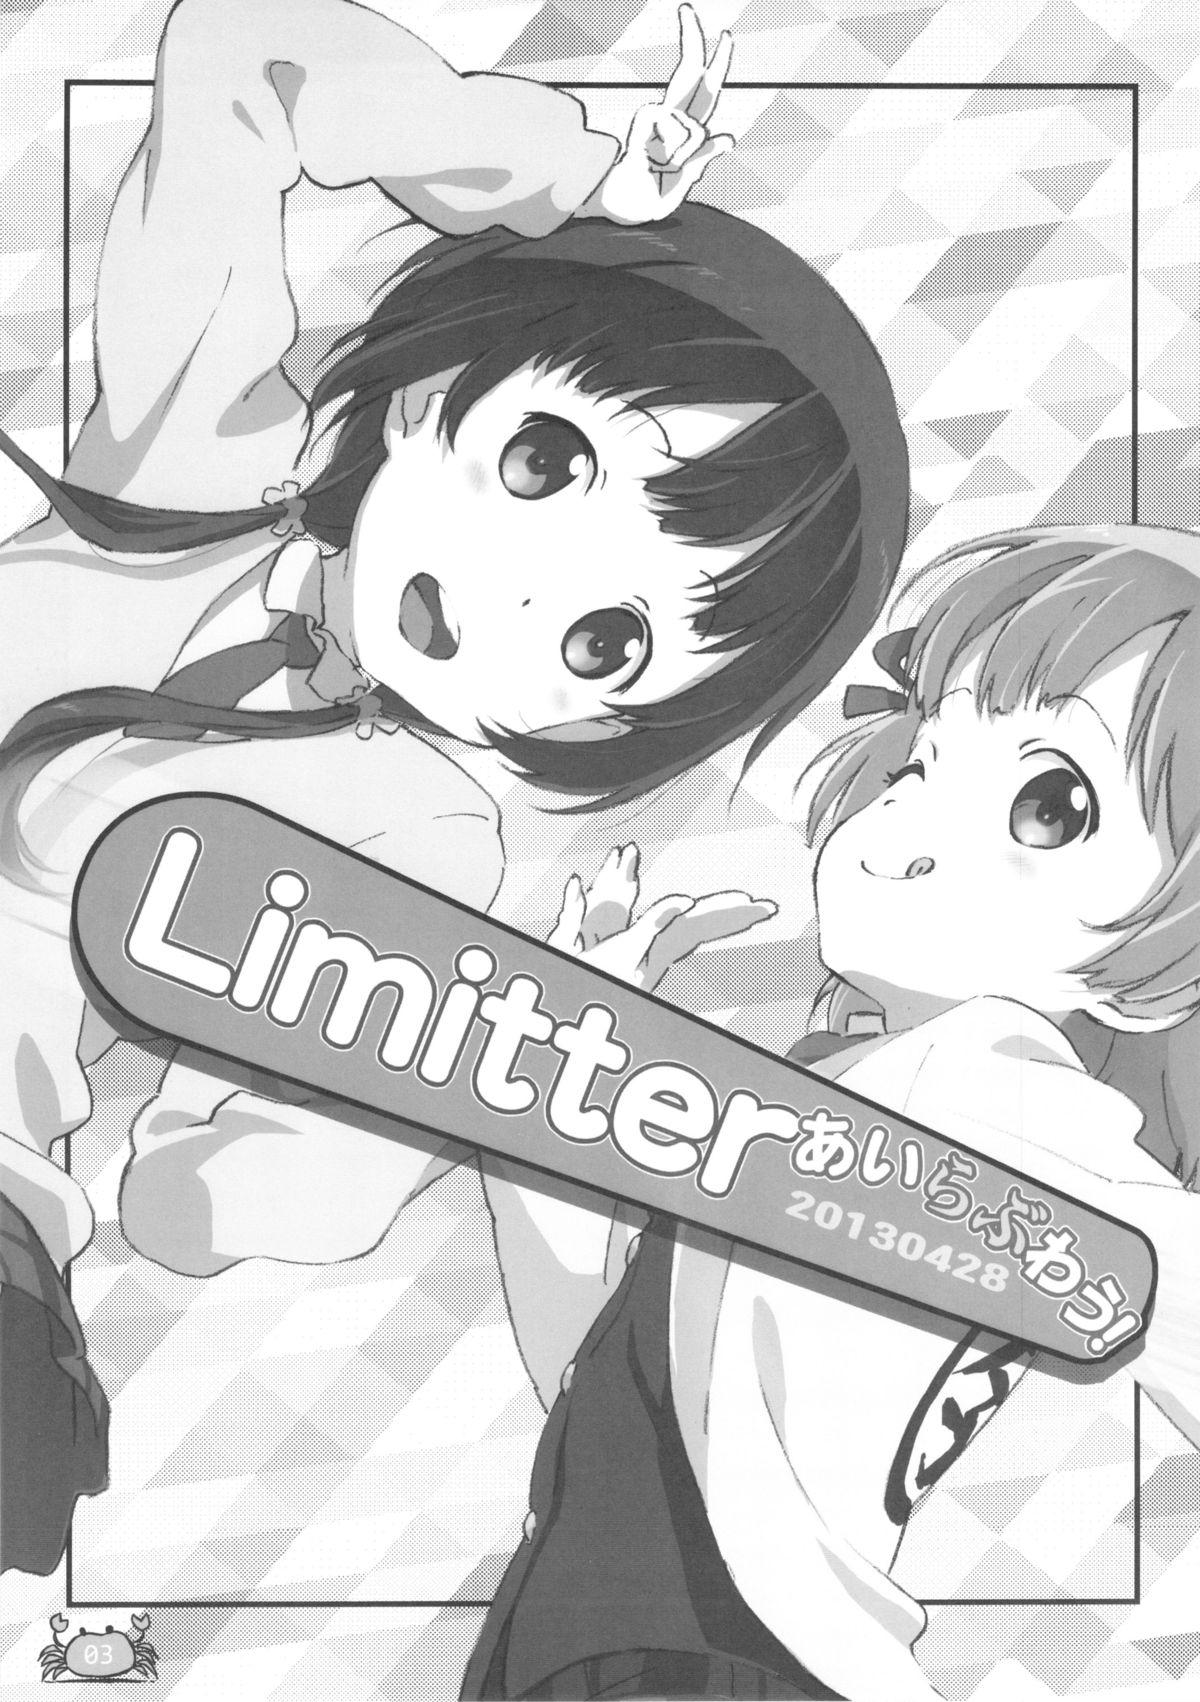 Piercing Limitter I Love Wau! 20130428 - Aiura Culo - Page 3